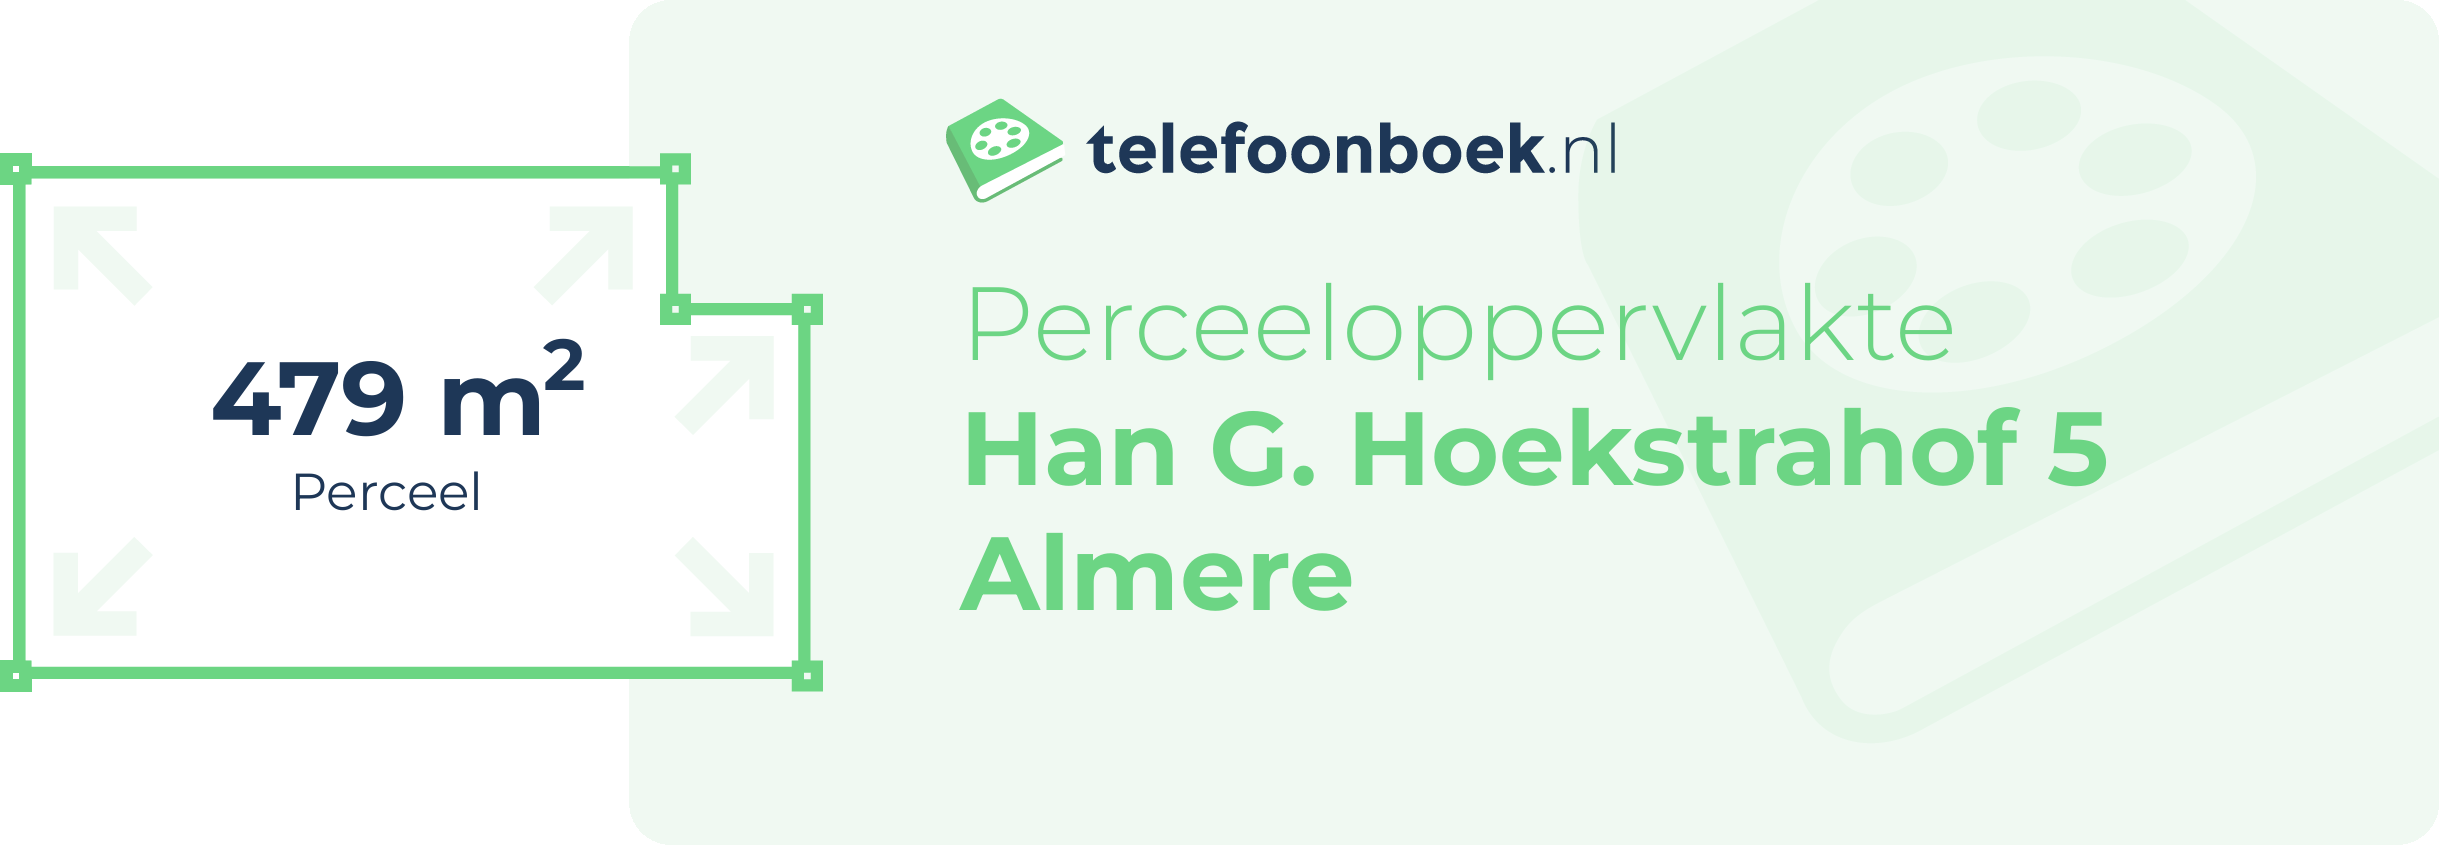 Perceeloppervlakte Han G. Hoekstrahof 5 Almere